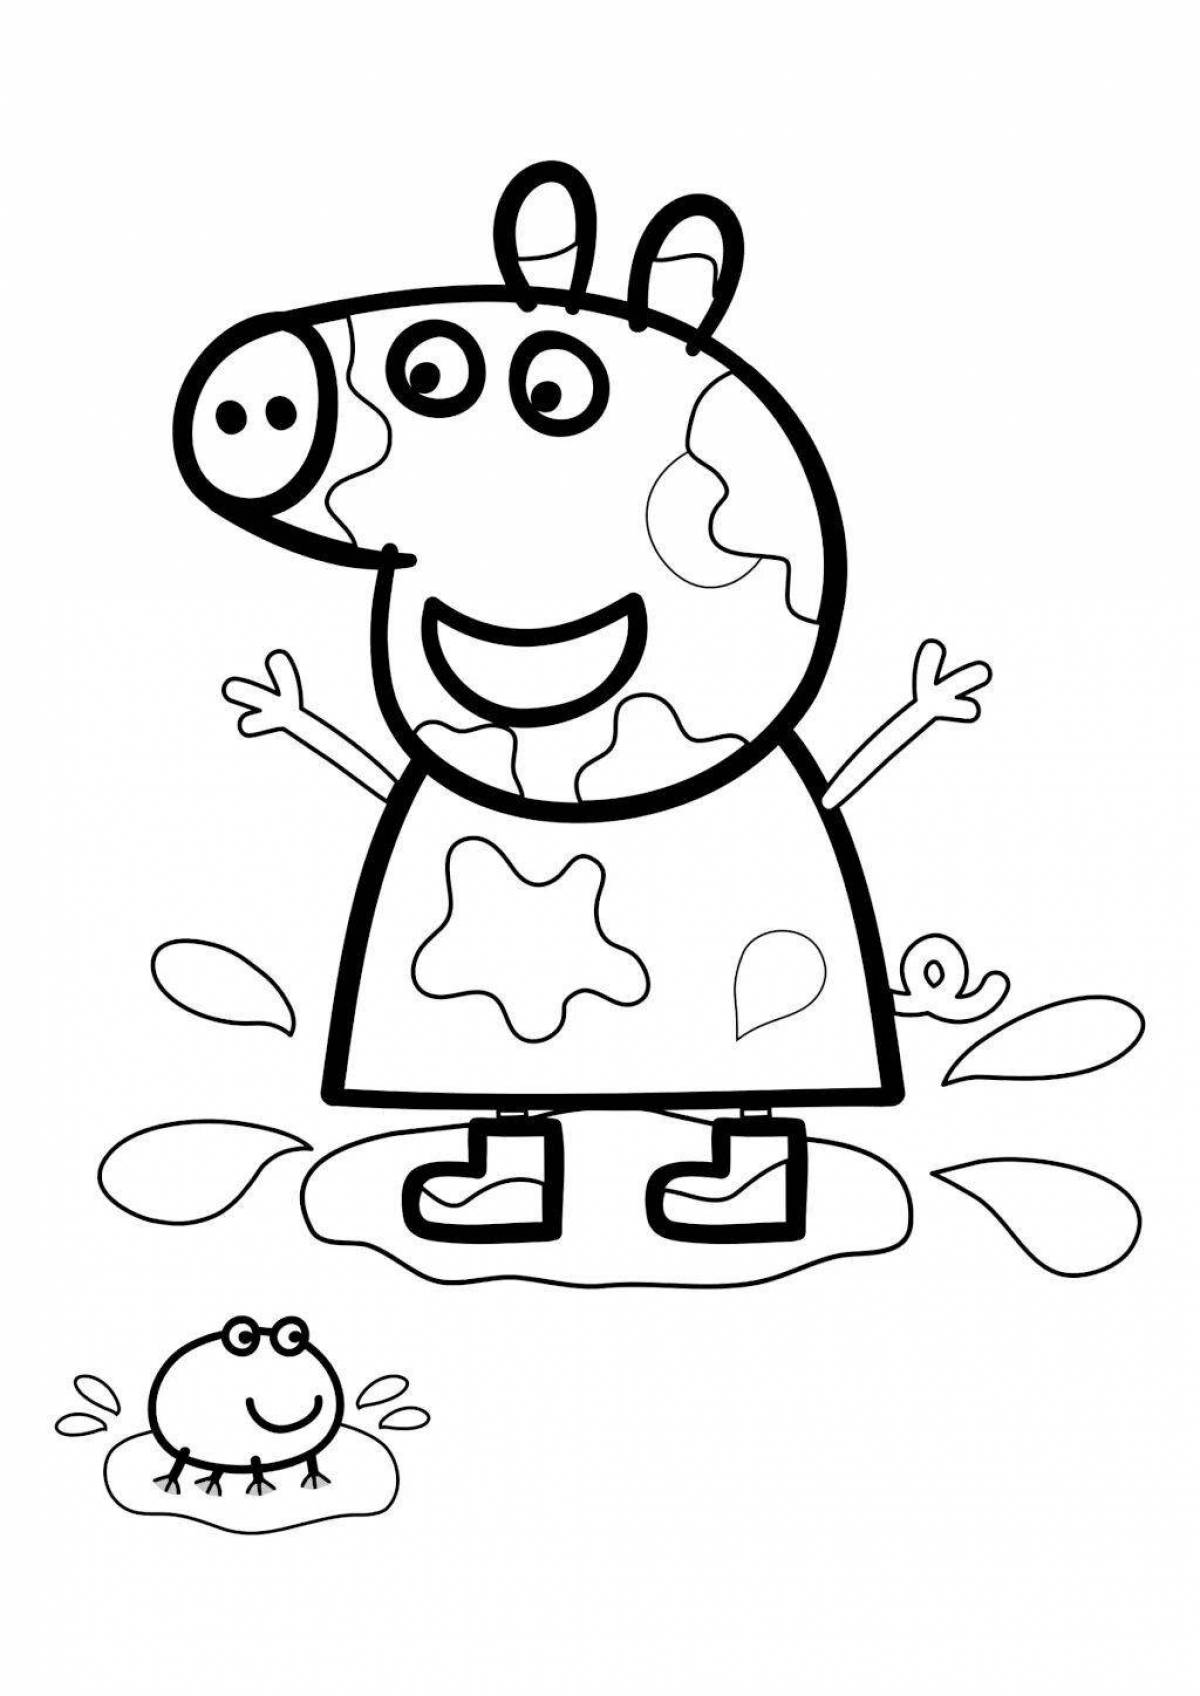 Great peppa pig coloring book